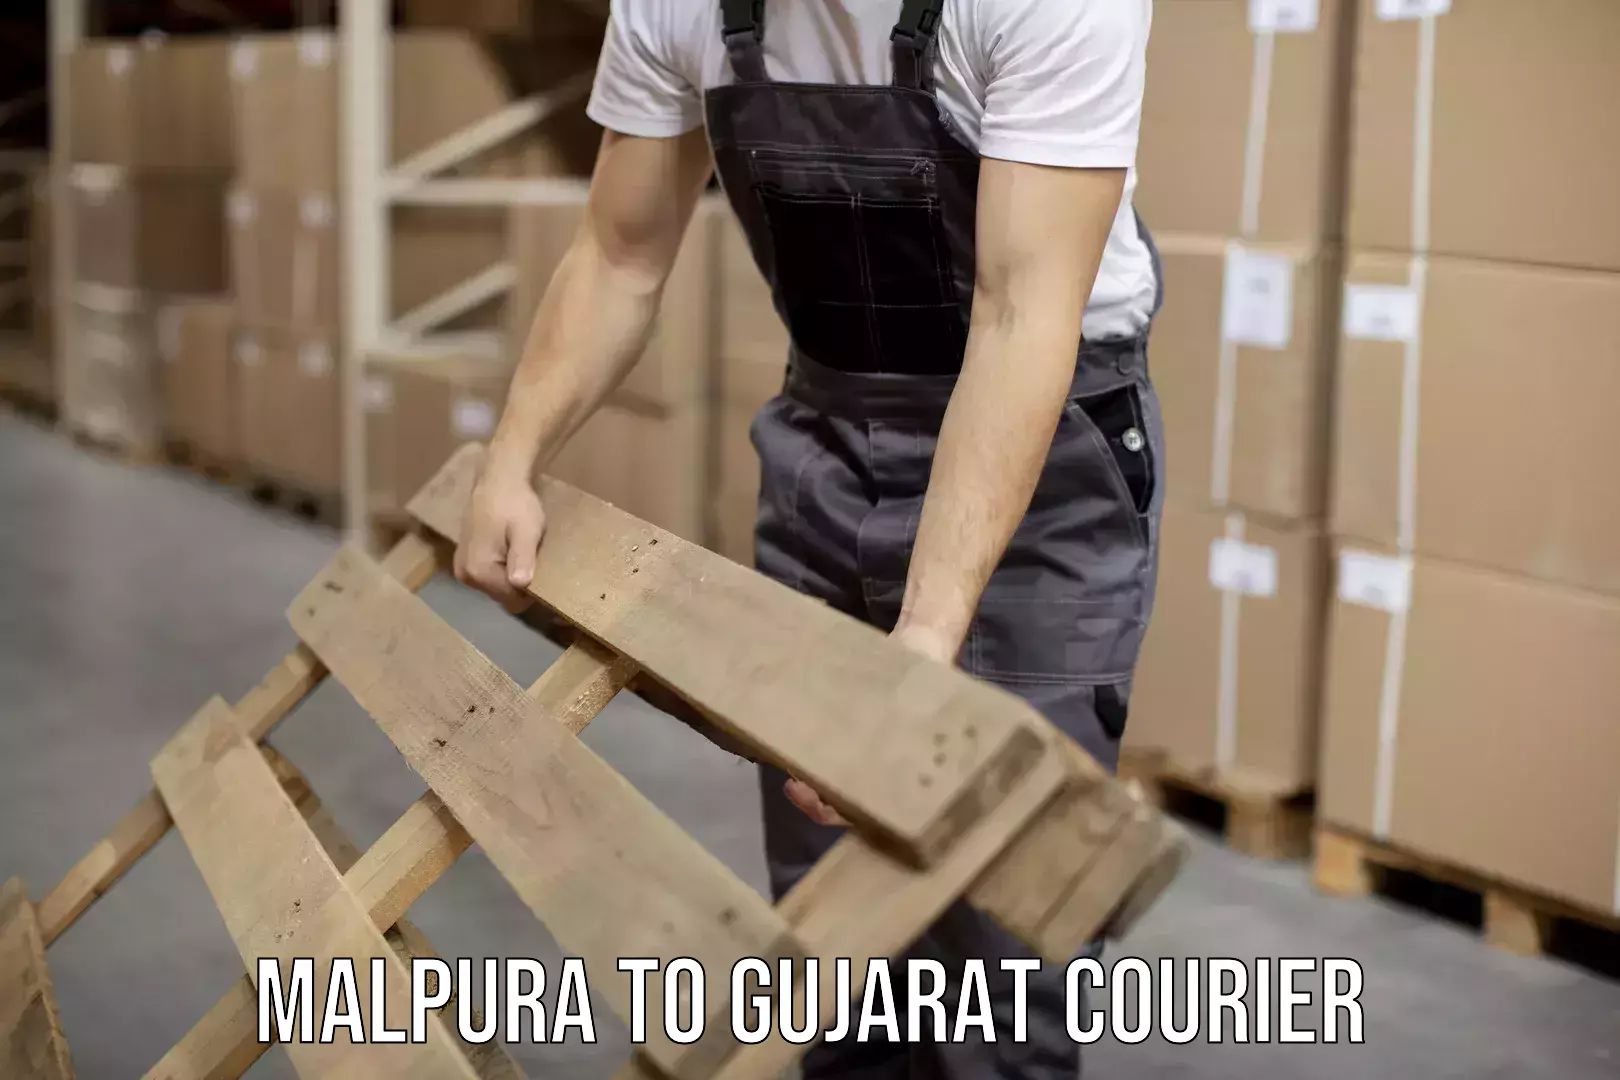 User-friendly delivery service Malpura to Gujarat